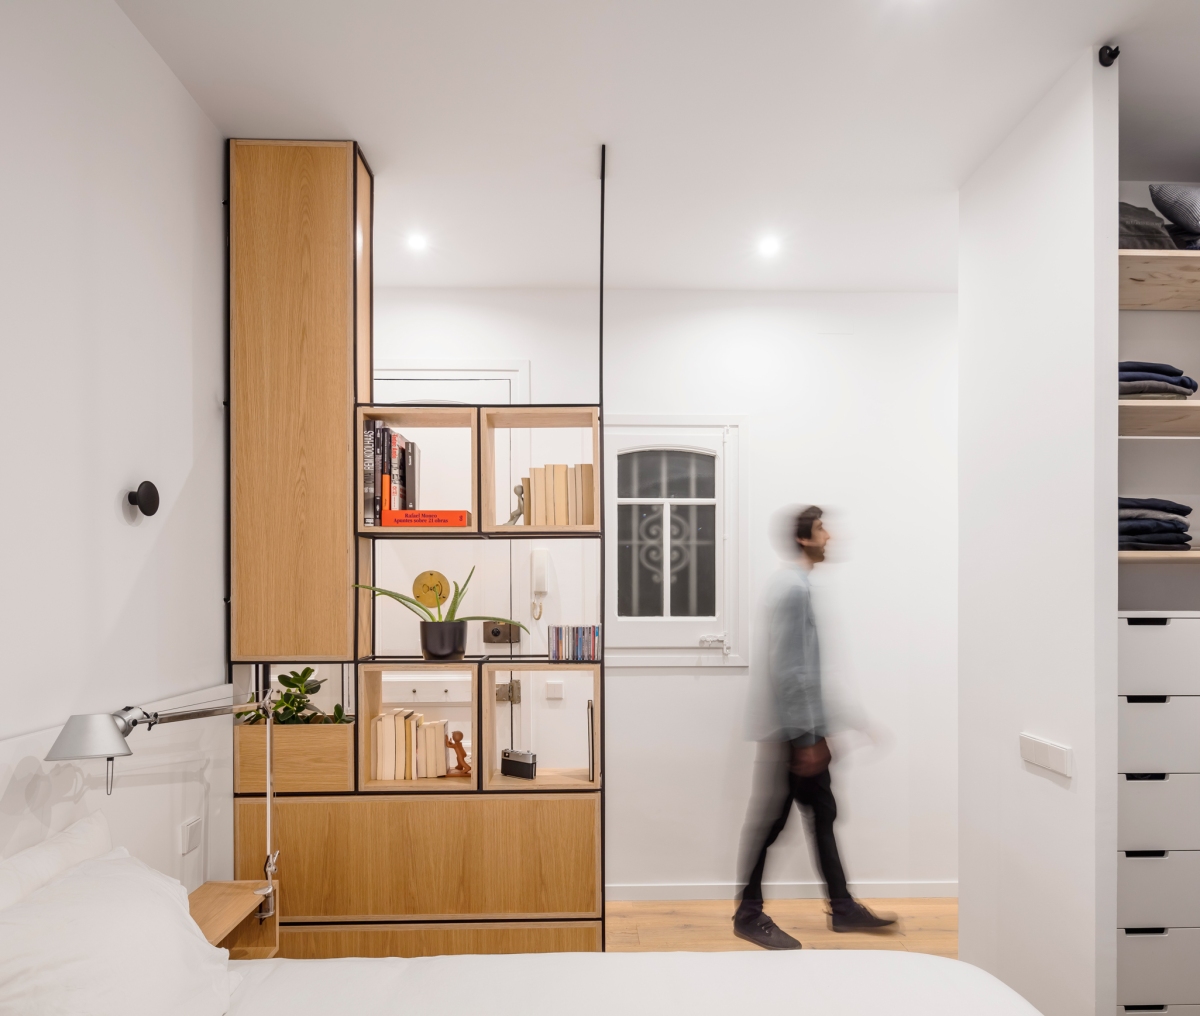 EO arquitectura - Alan's apartment renovation: bedroom